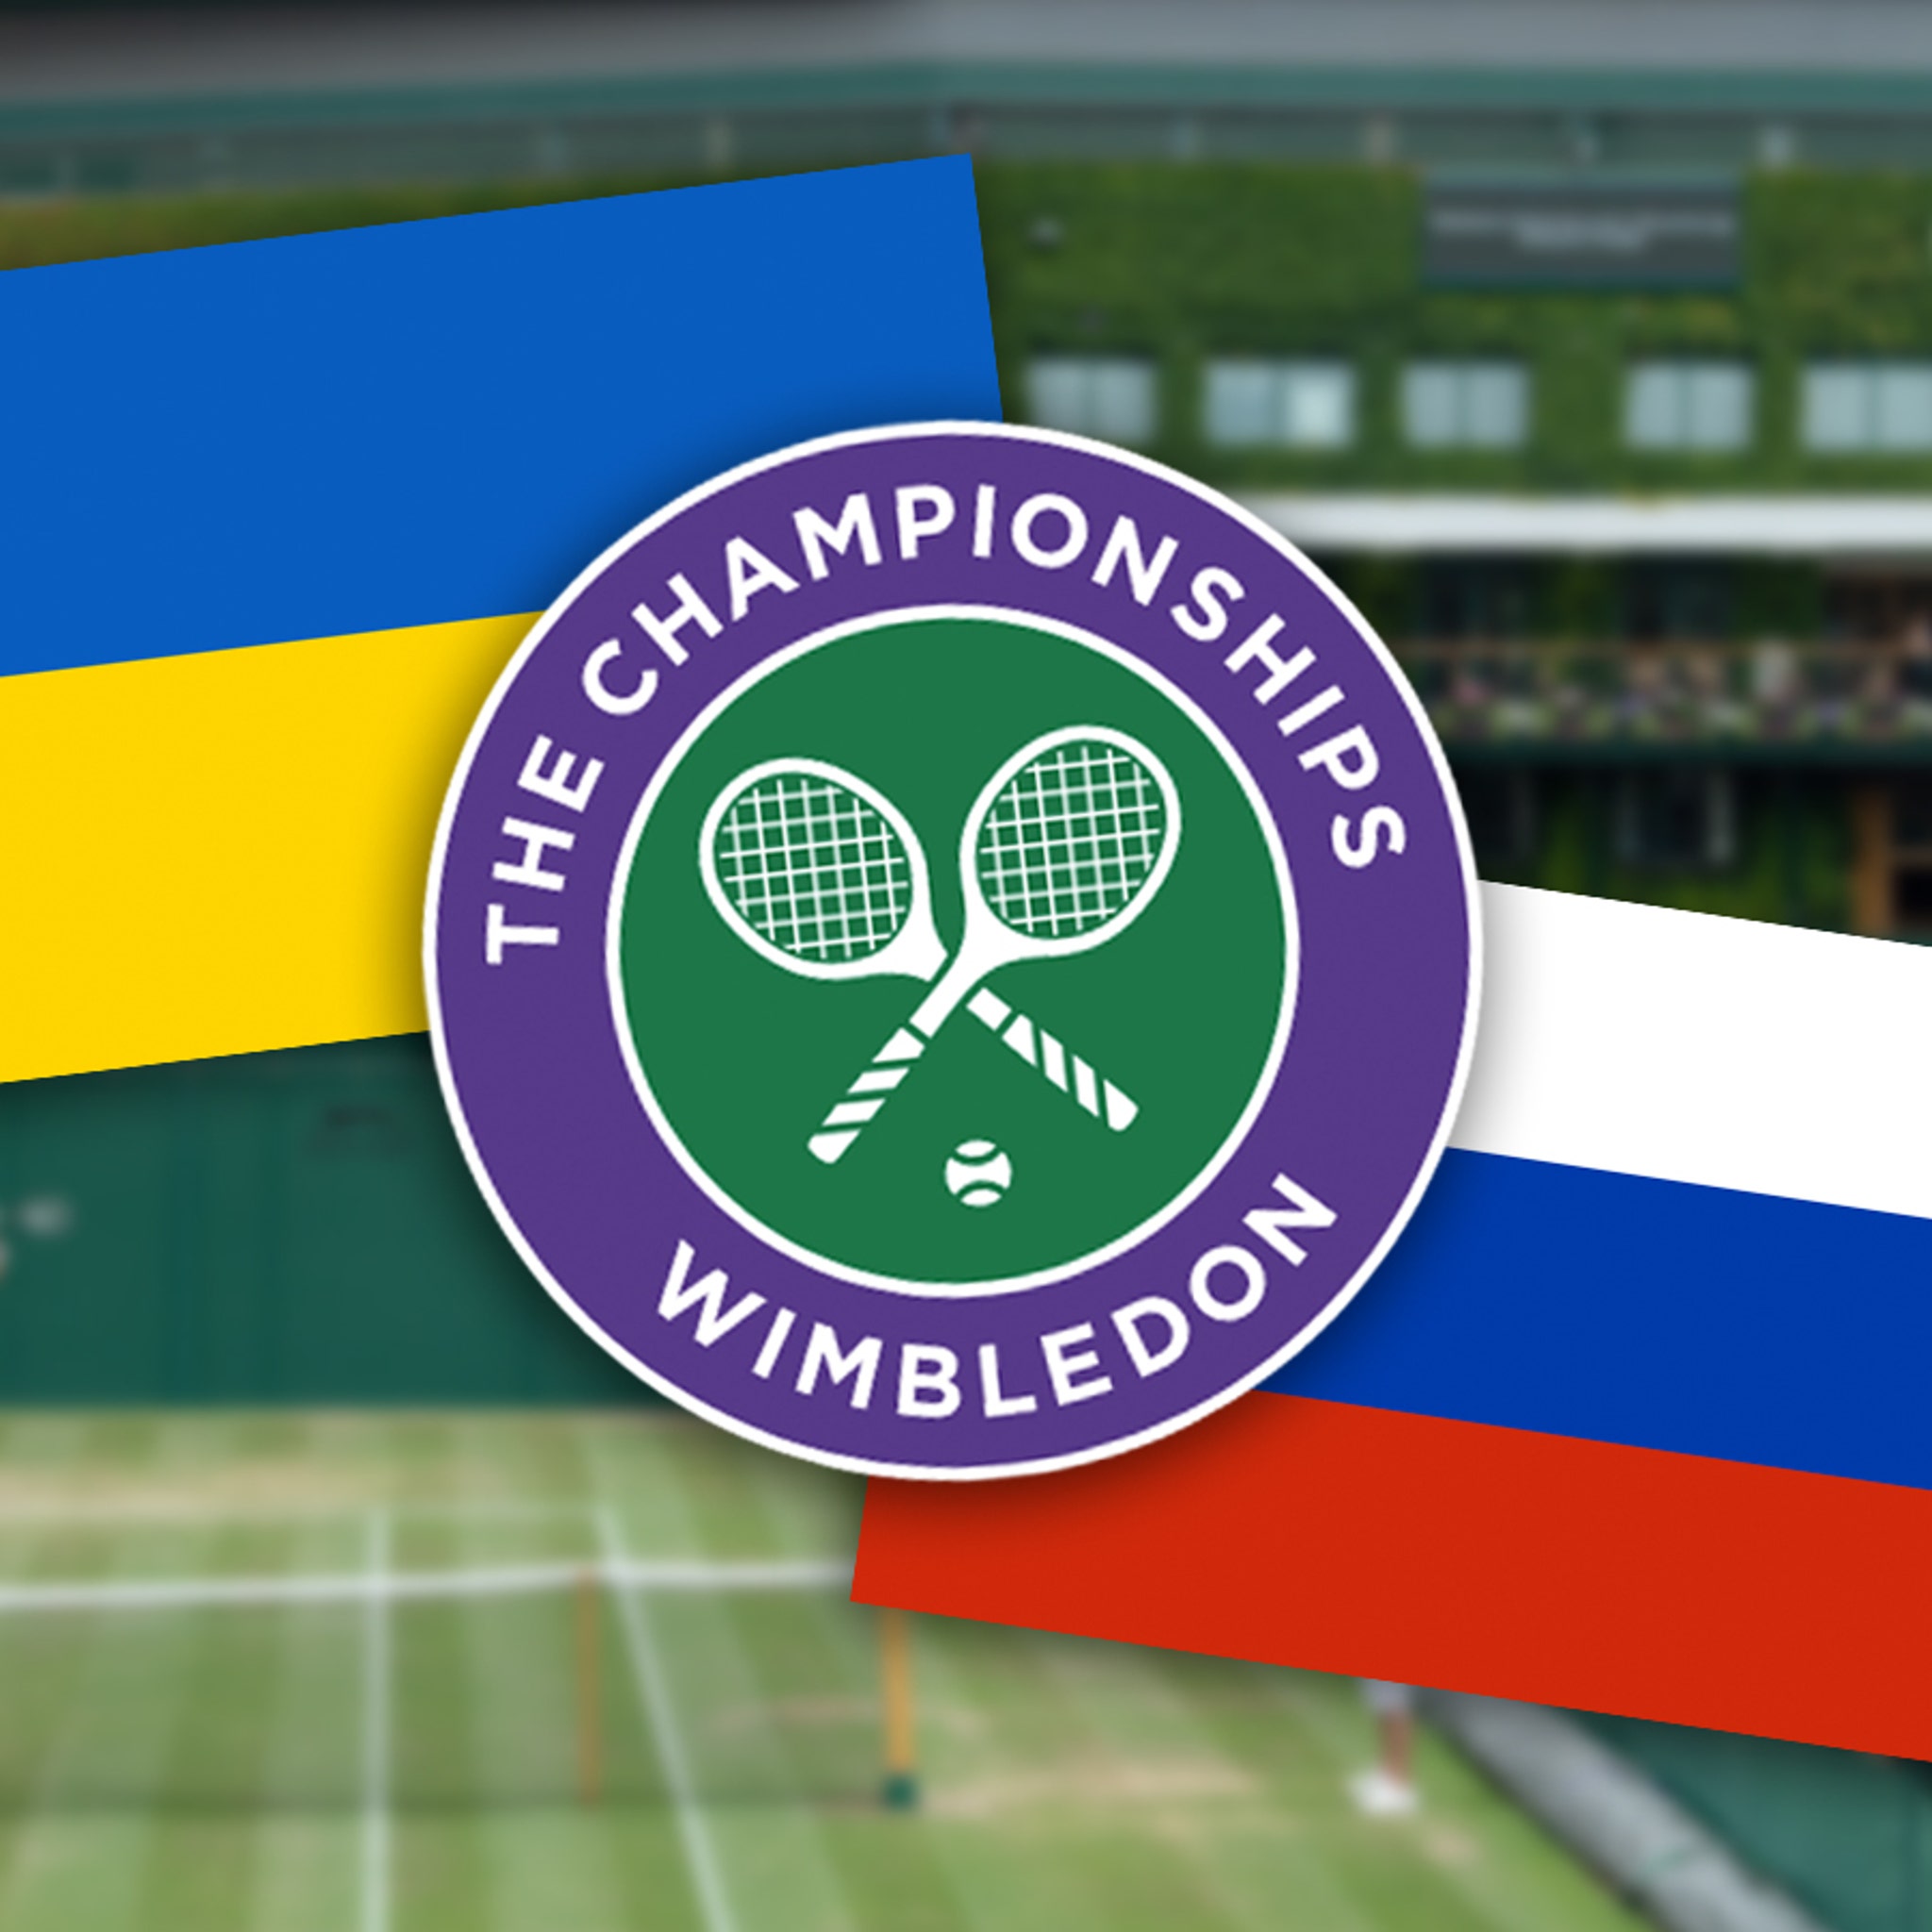 Wimbledon was wrong to ban Russians, says Rublev